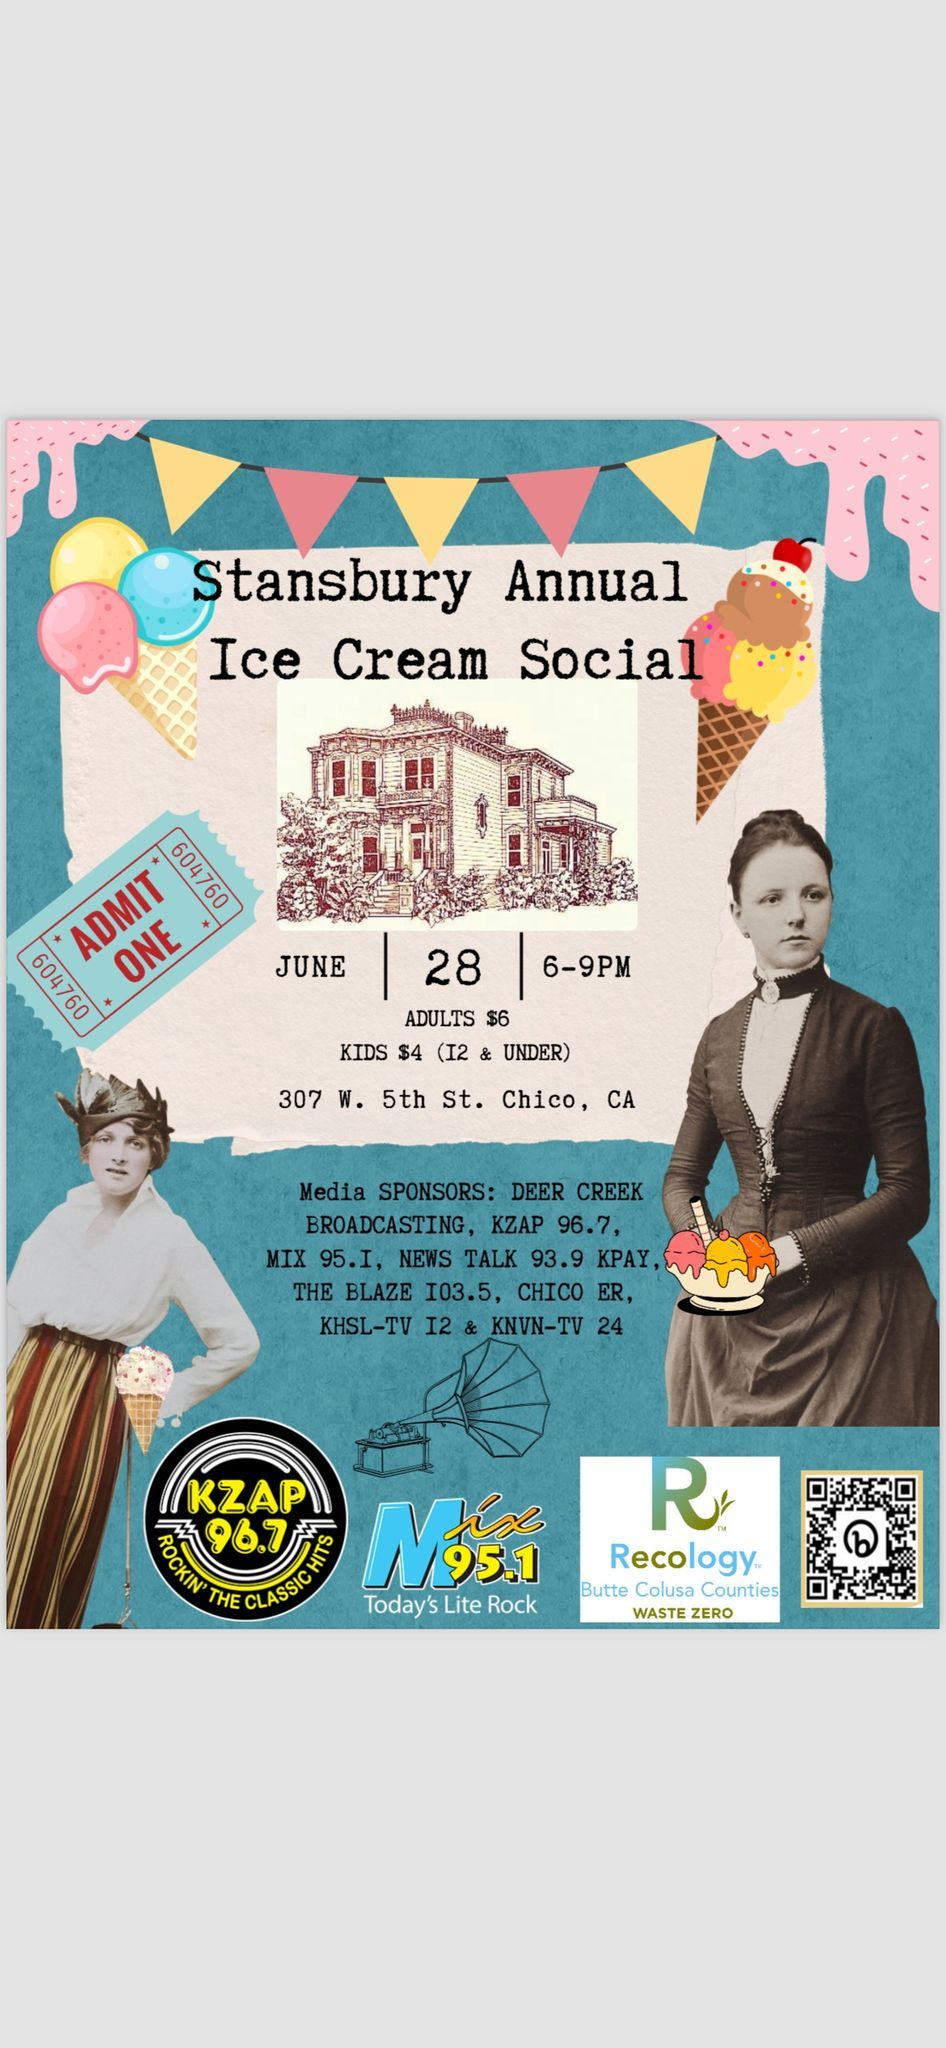 Annual Stansbury Ice Cream Social 